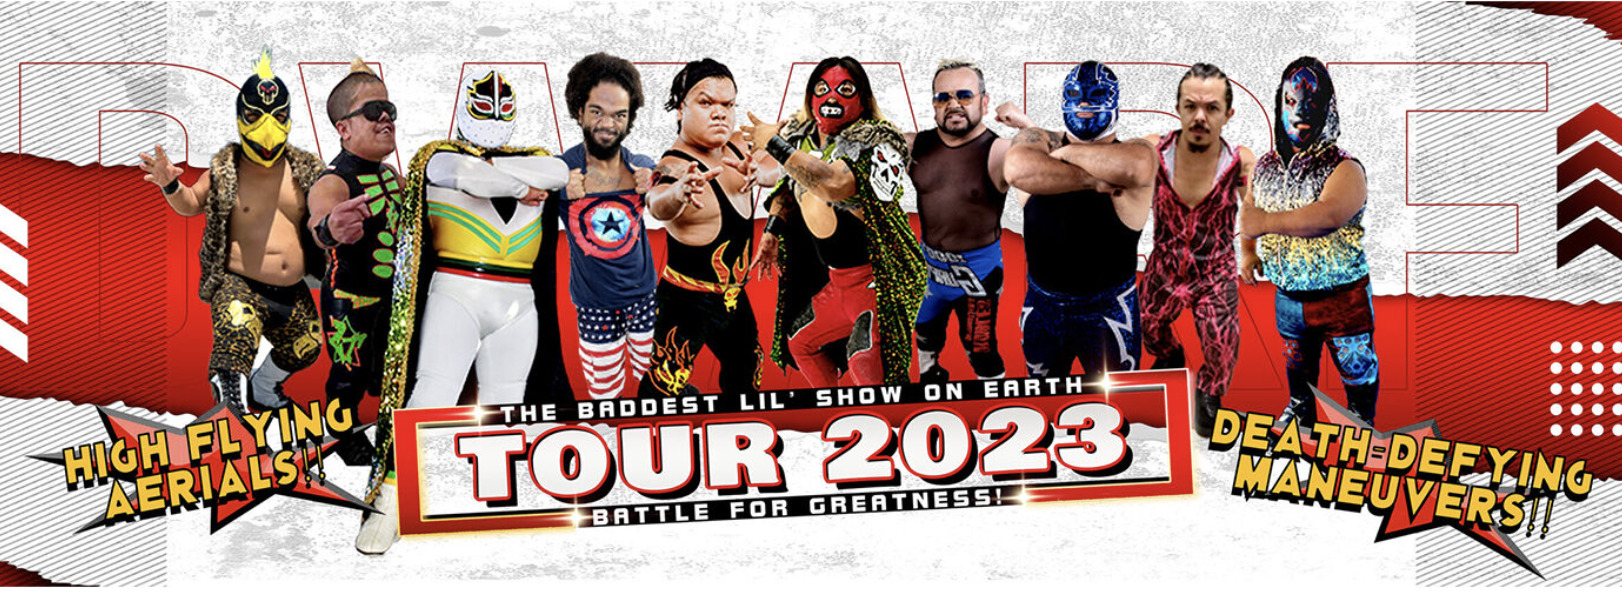 Baddest Lil Show Tour 2023 | Extreme Dwarfanators Wrestling